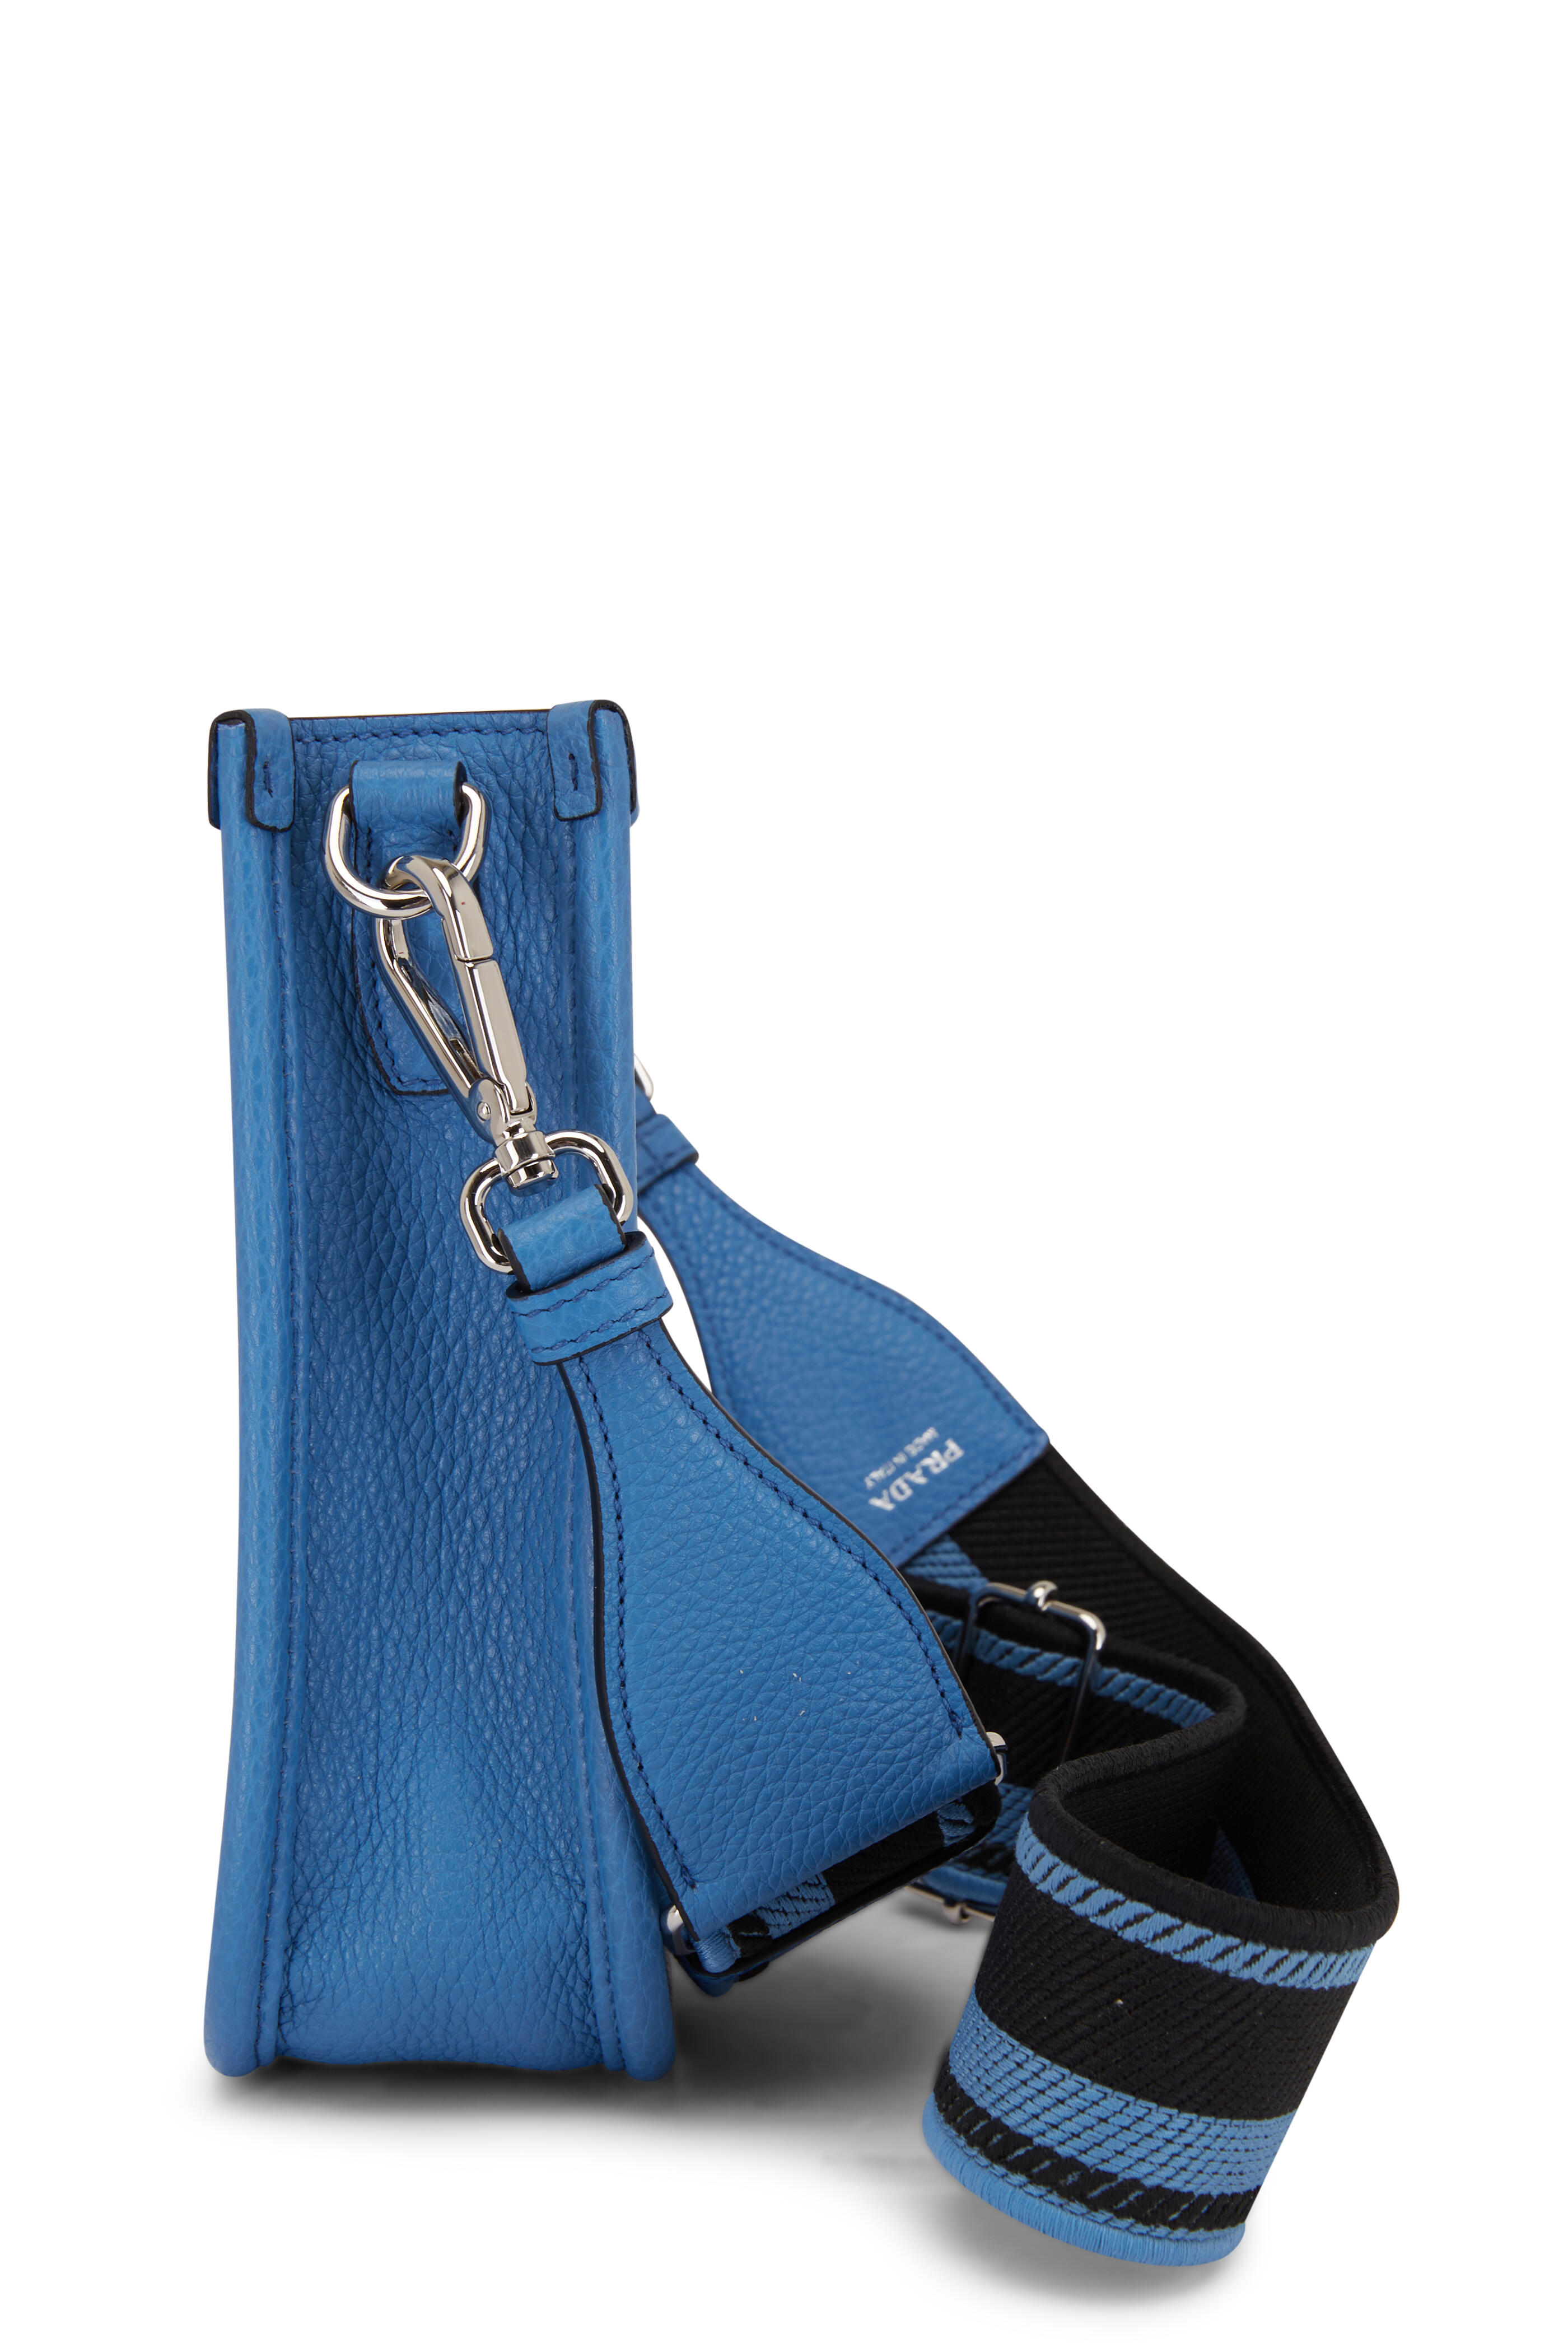 Prada - Flou Blue Leather Mini Shoulder Bag